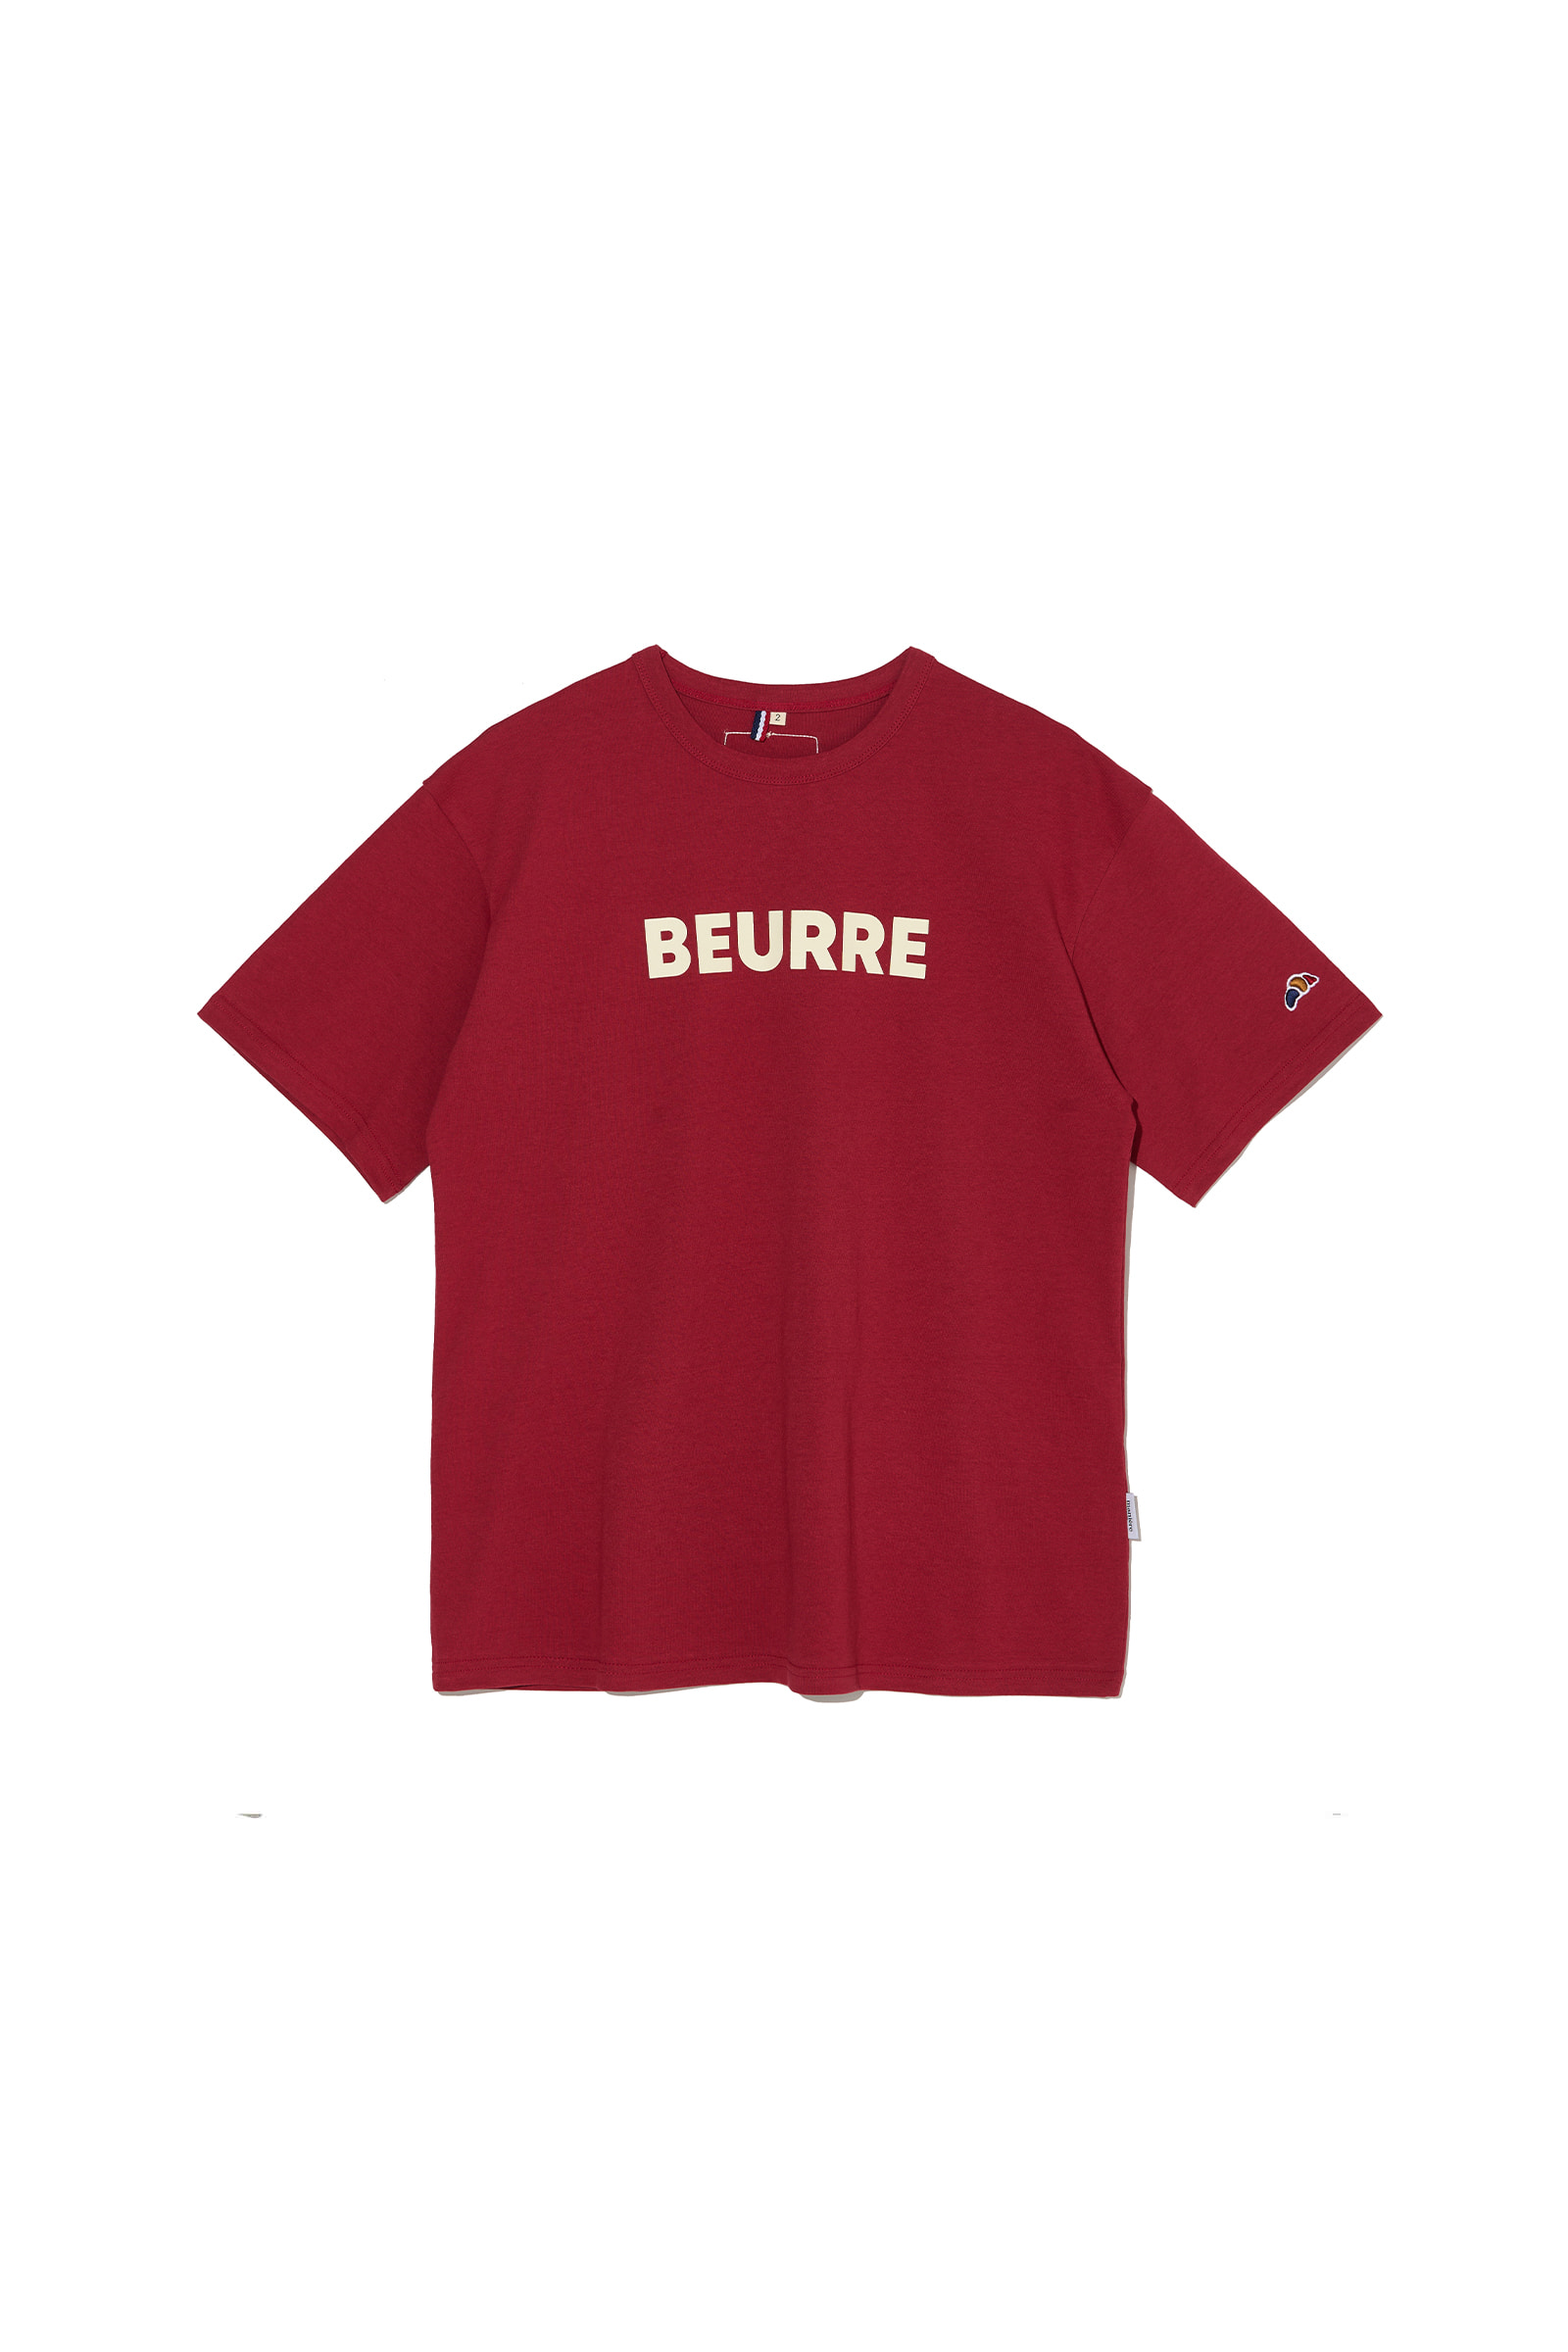 ep.6 BEURRE T-shirts (Burgundy)